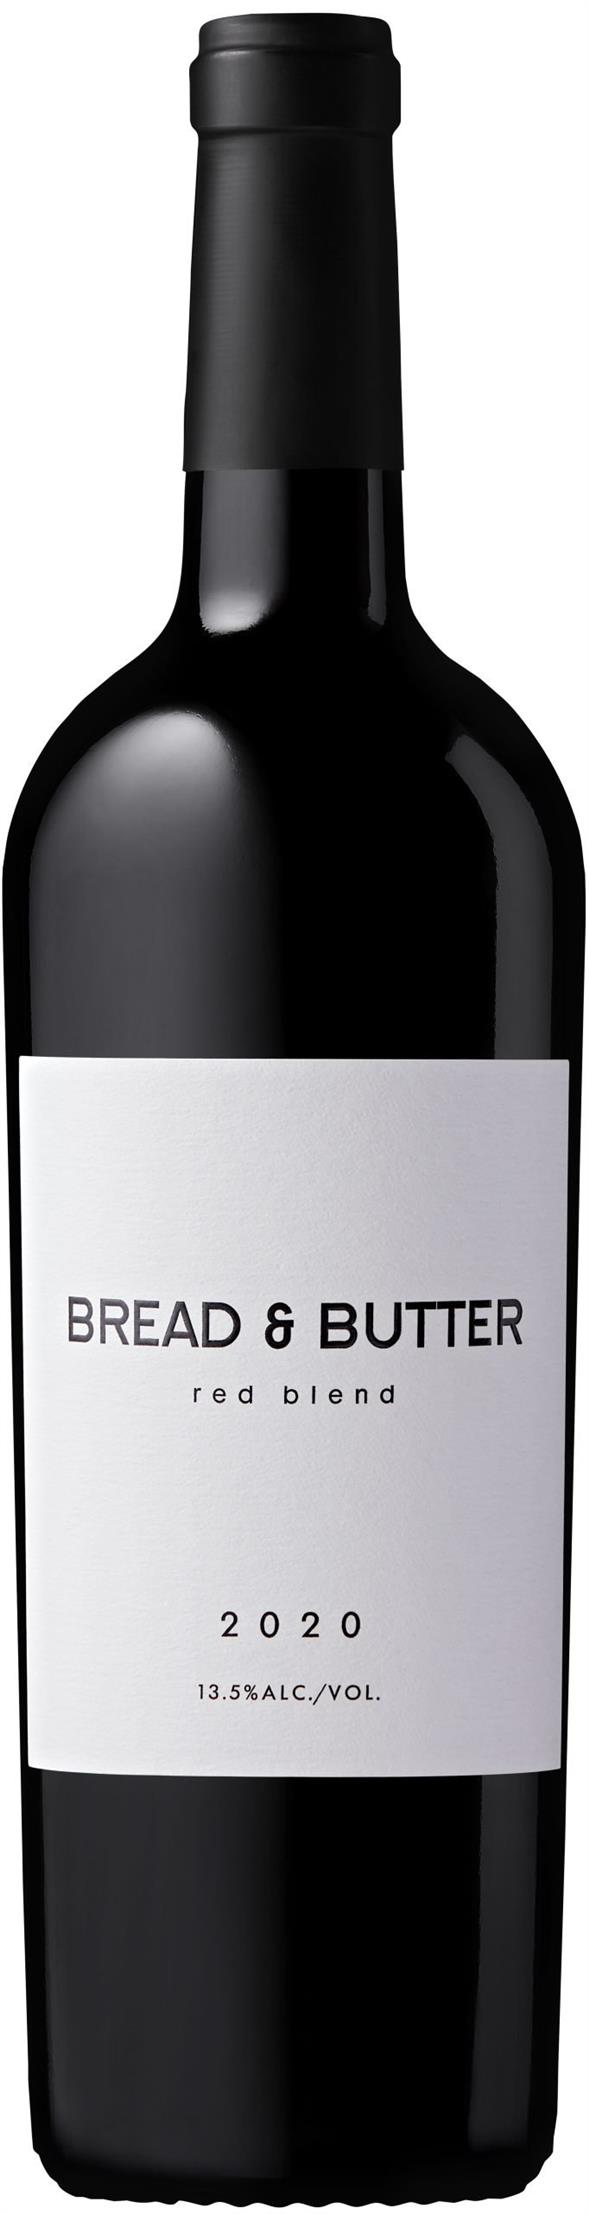 Bread & Butter – Red Blend 2020